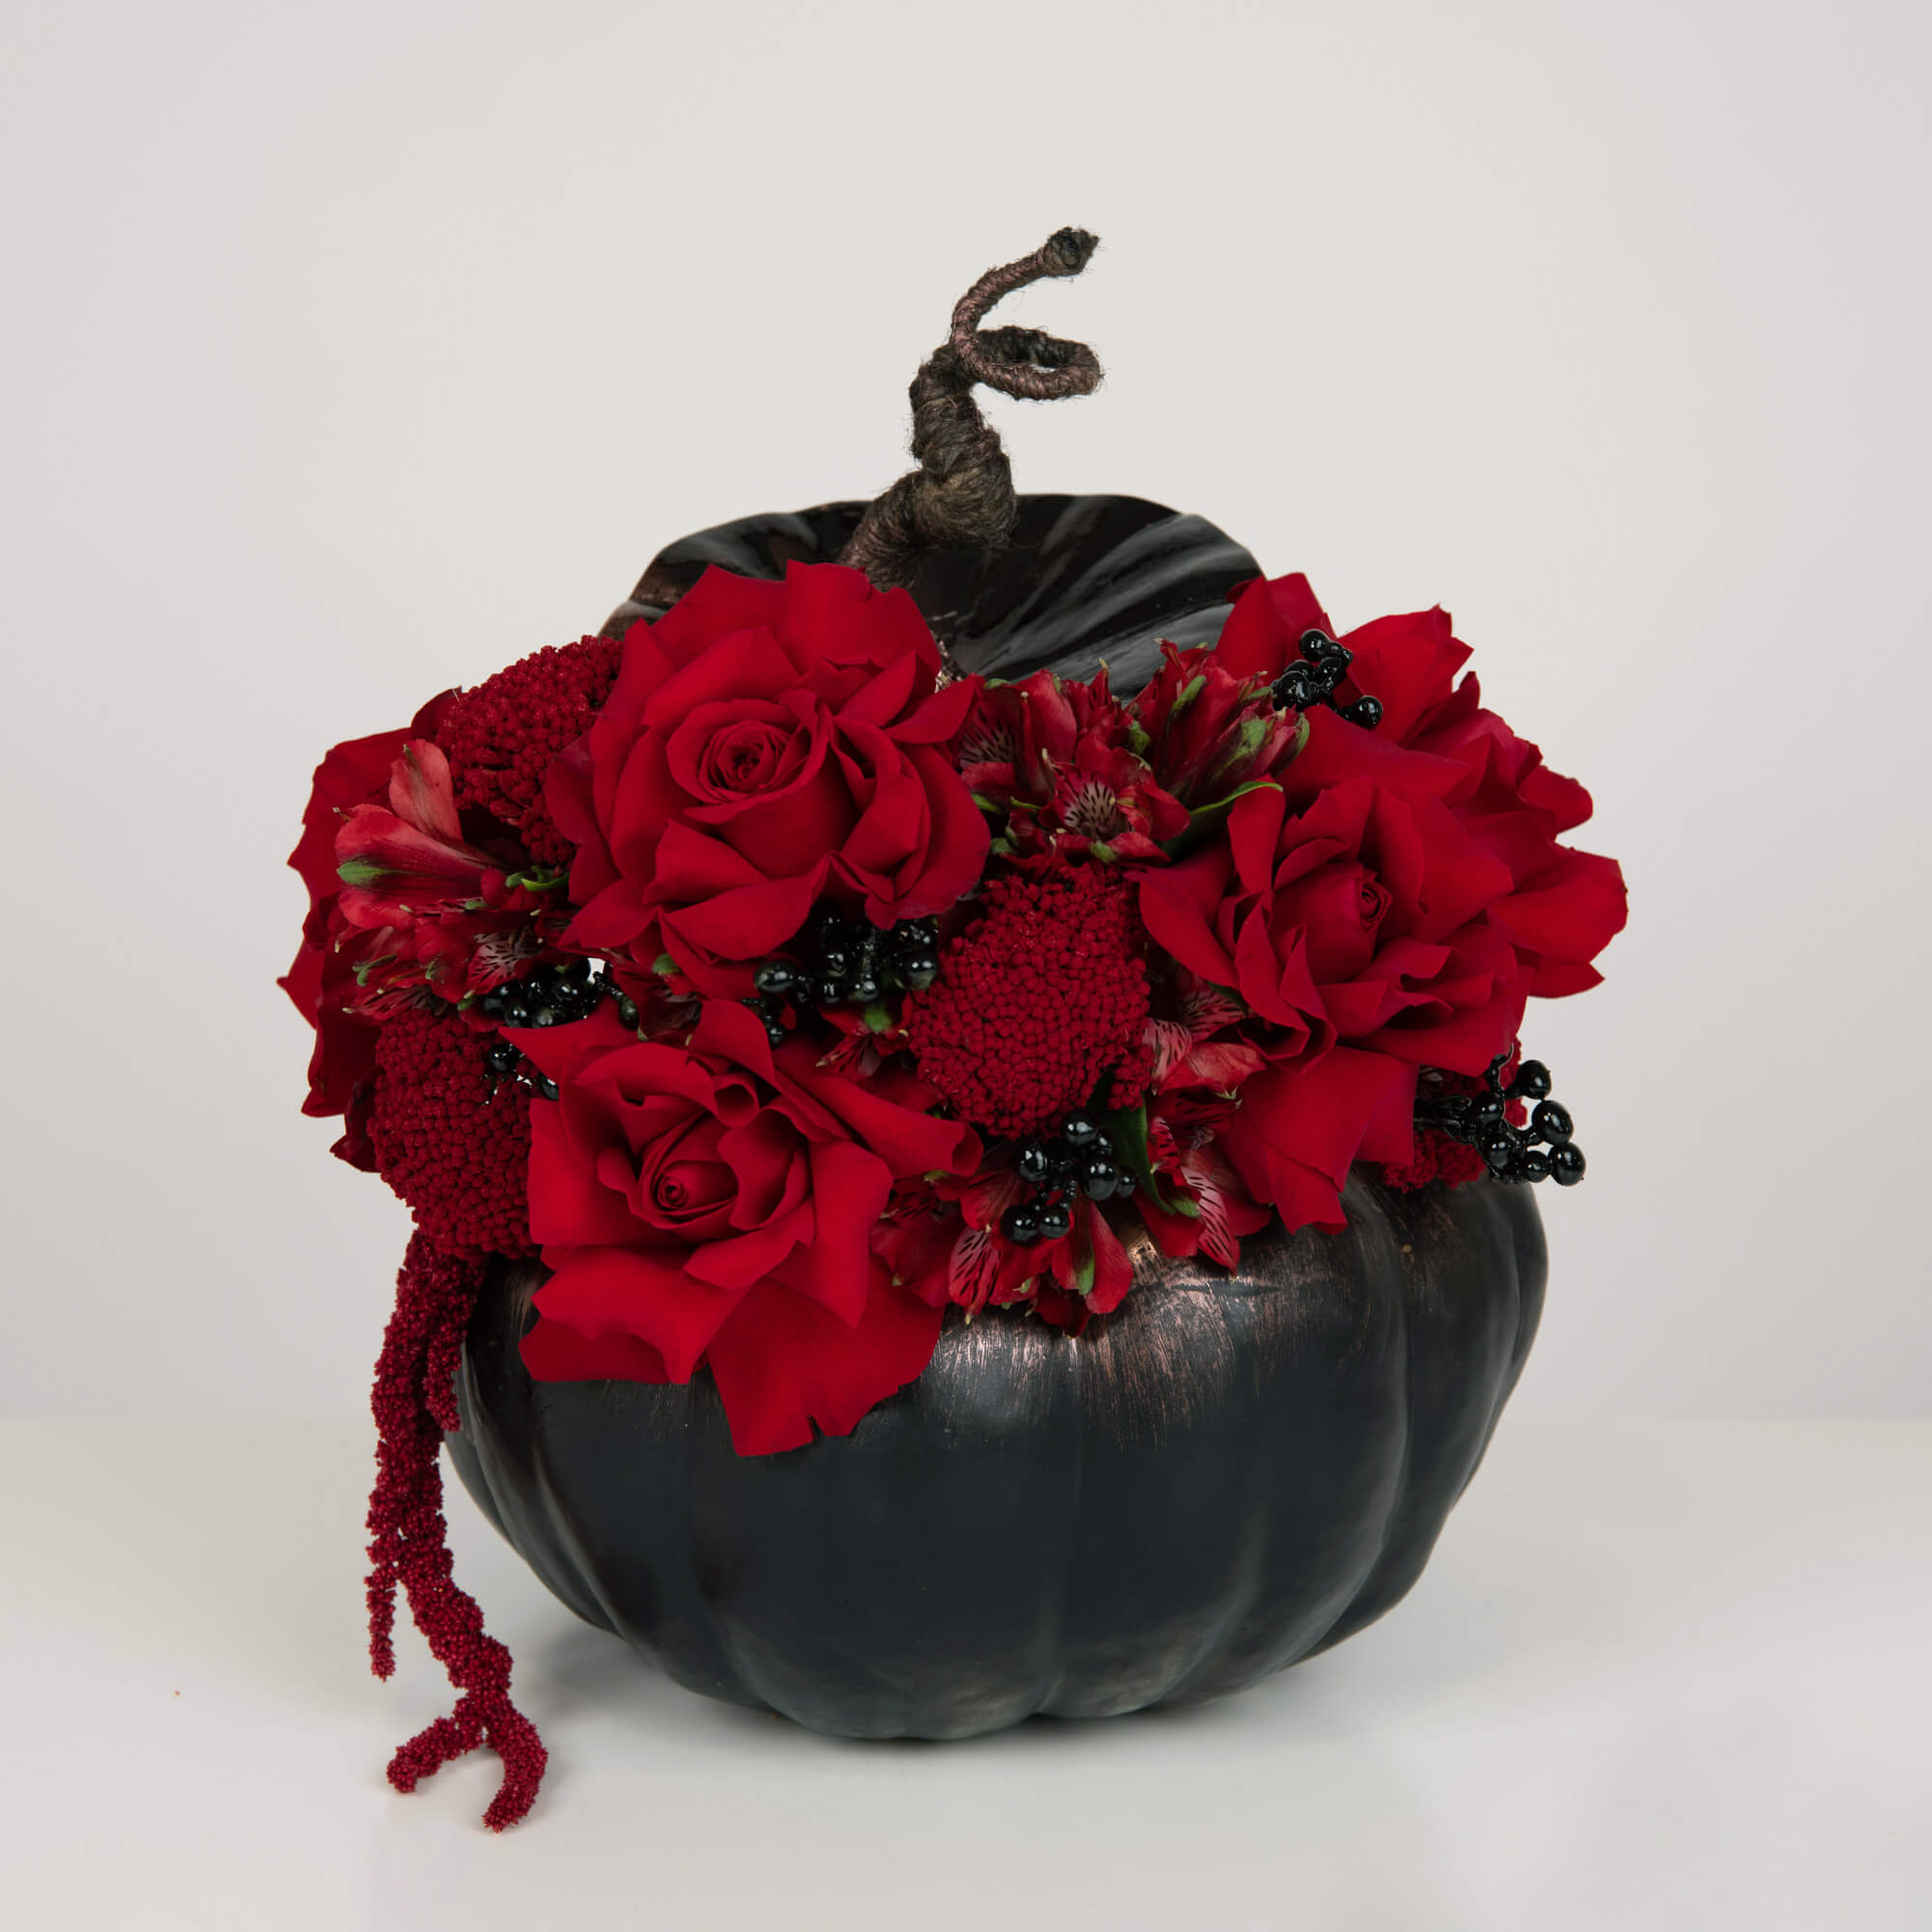 Pumpkin arrangement with roses and alstroemeria